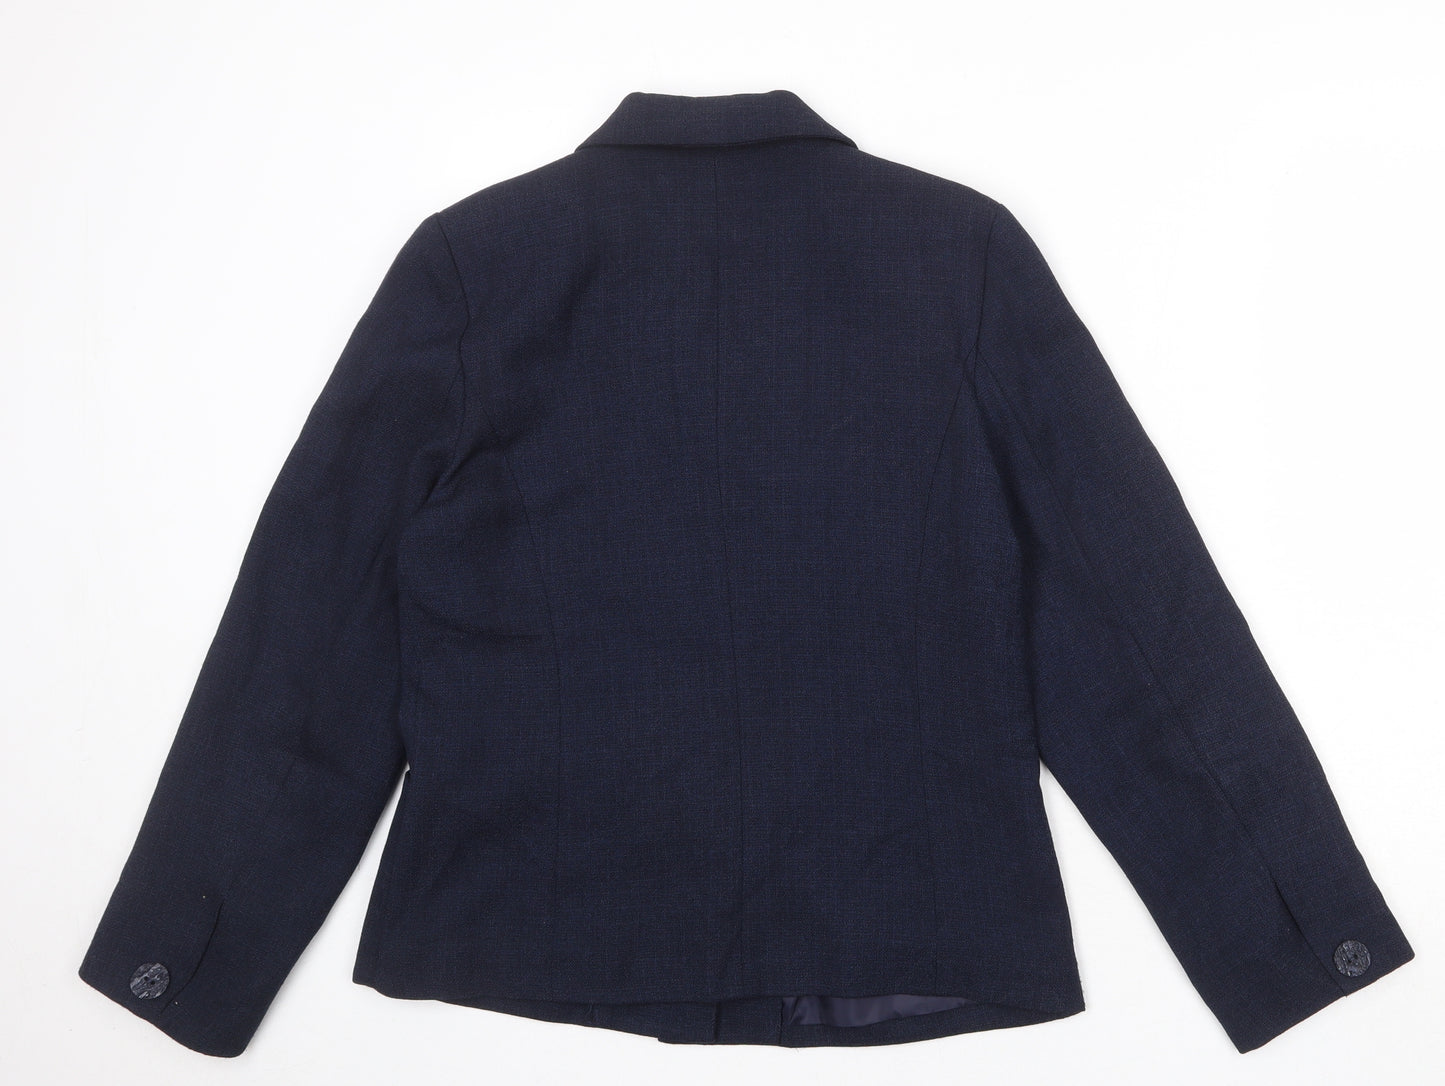 EWM Womens Blue Polyester Jacket Suit Jacket Size 12